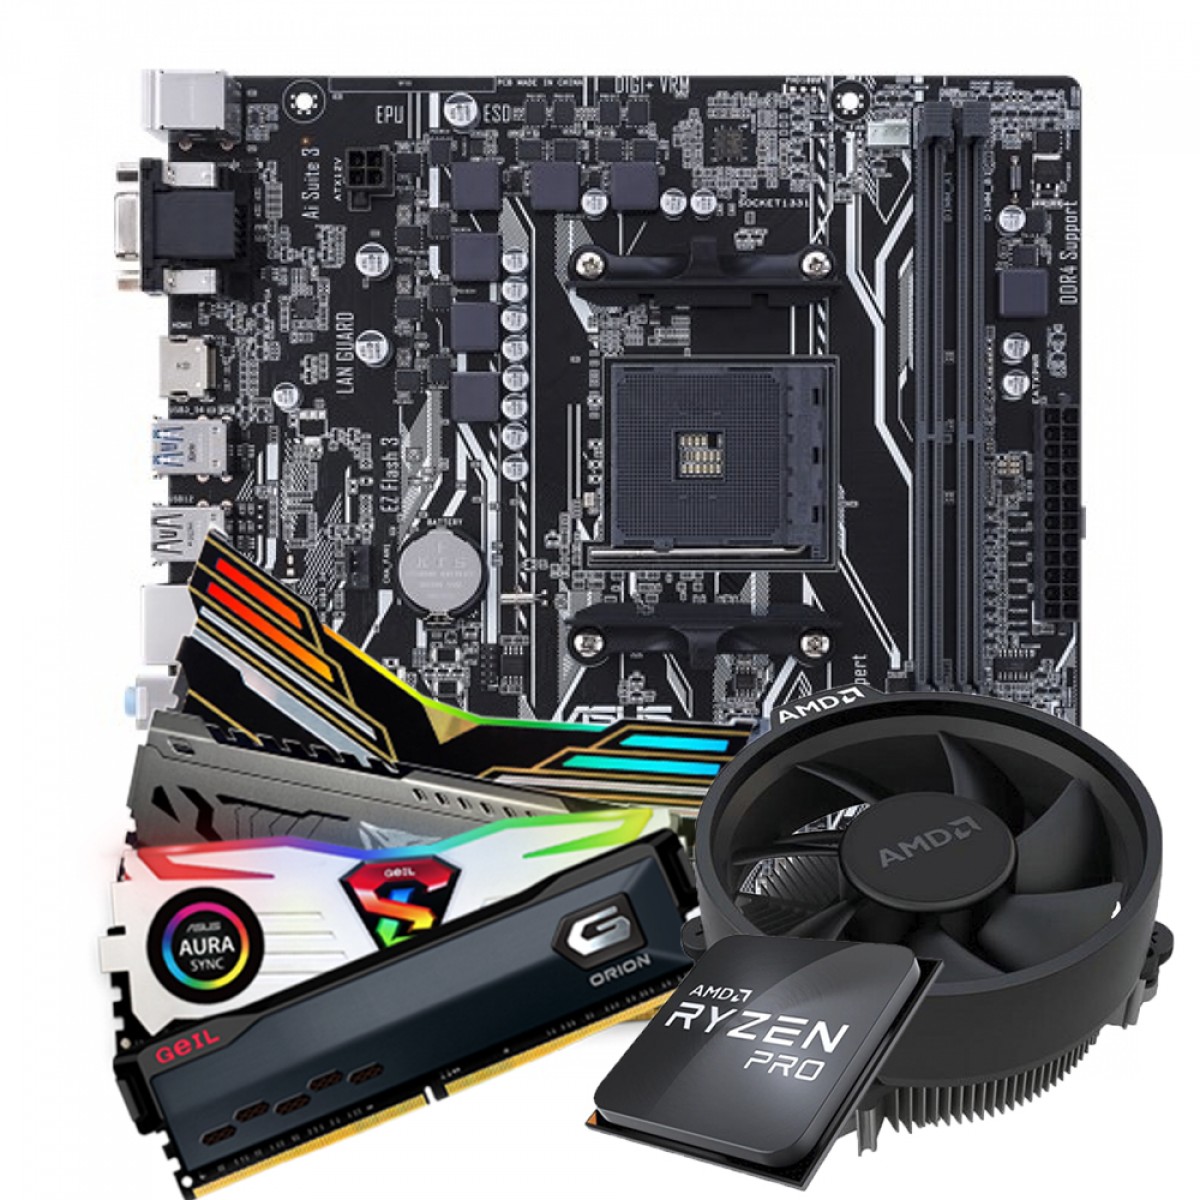 Kit Upgrade AMD Ryzen 5 PRO 2400GE + Asus Prime A320M-K + Memória DDR4 16GB (2x8GB) 2666MHz